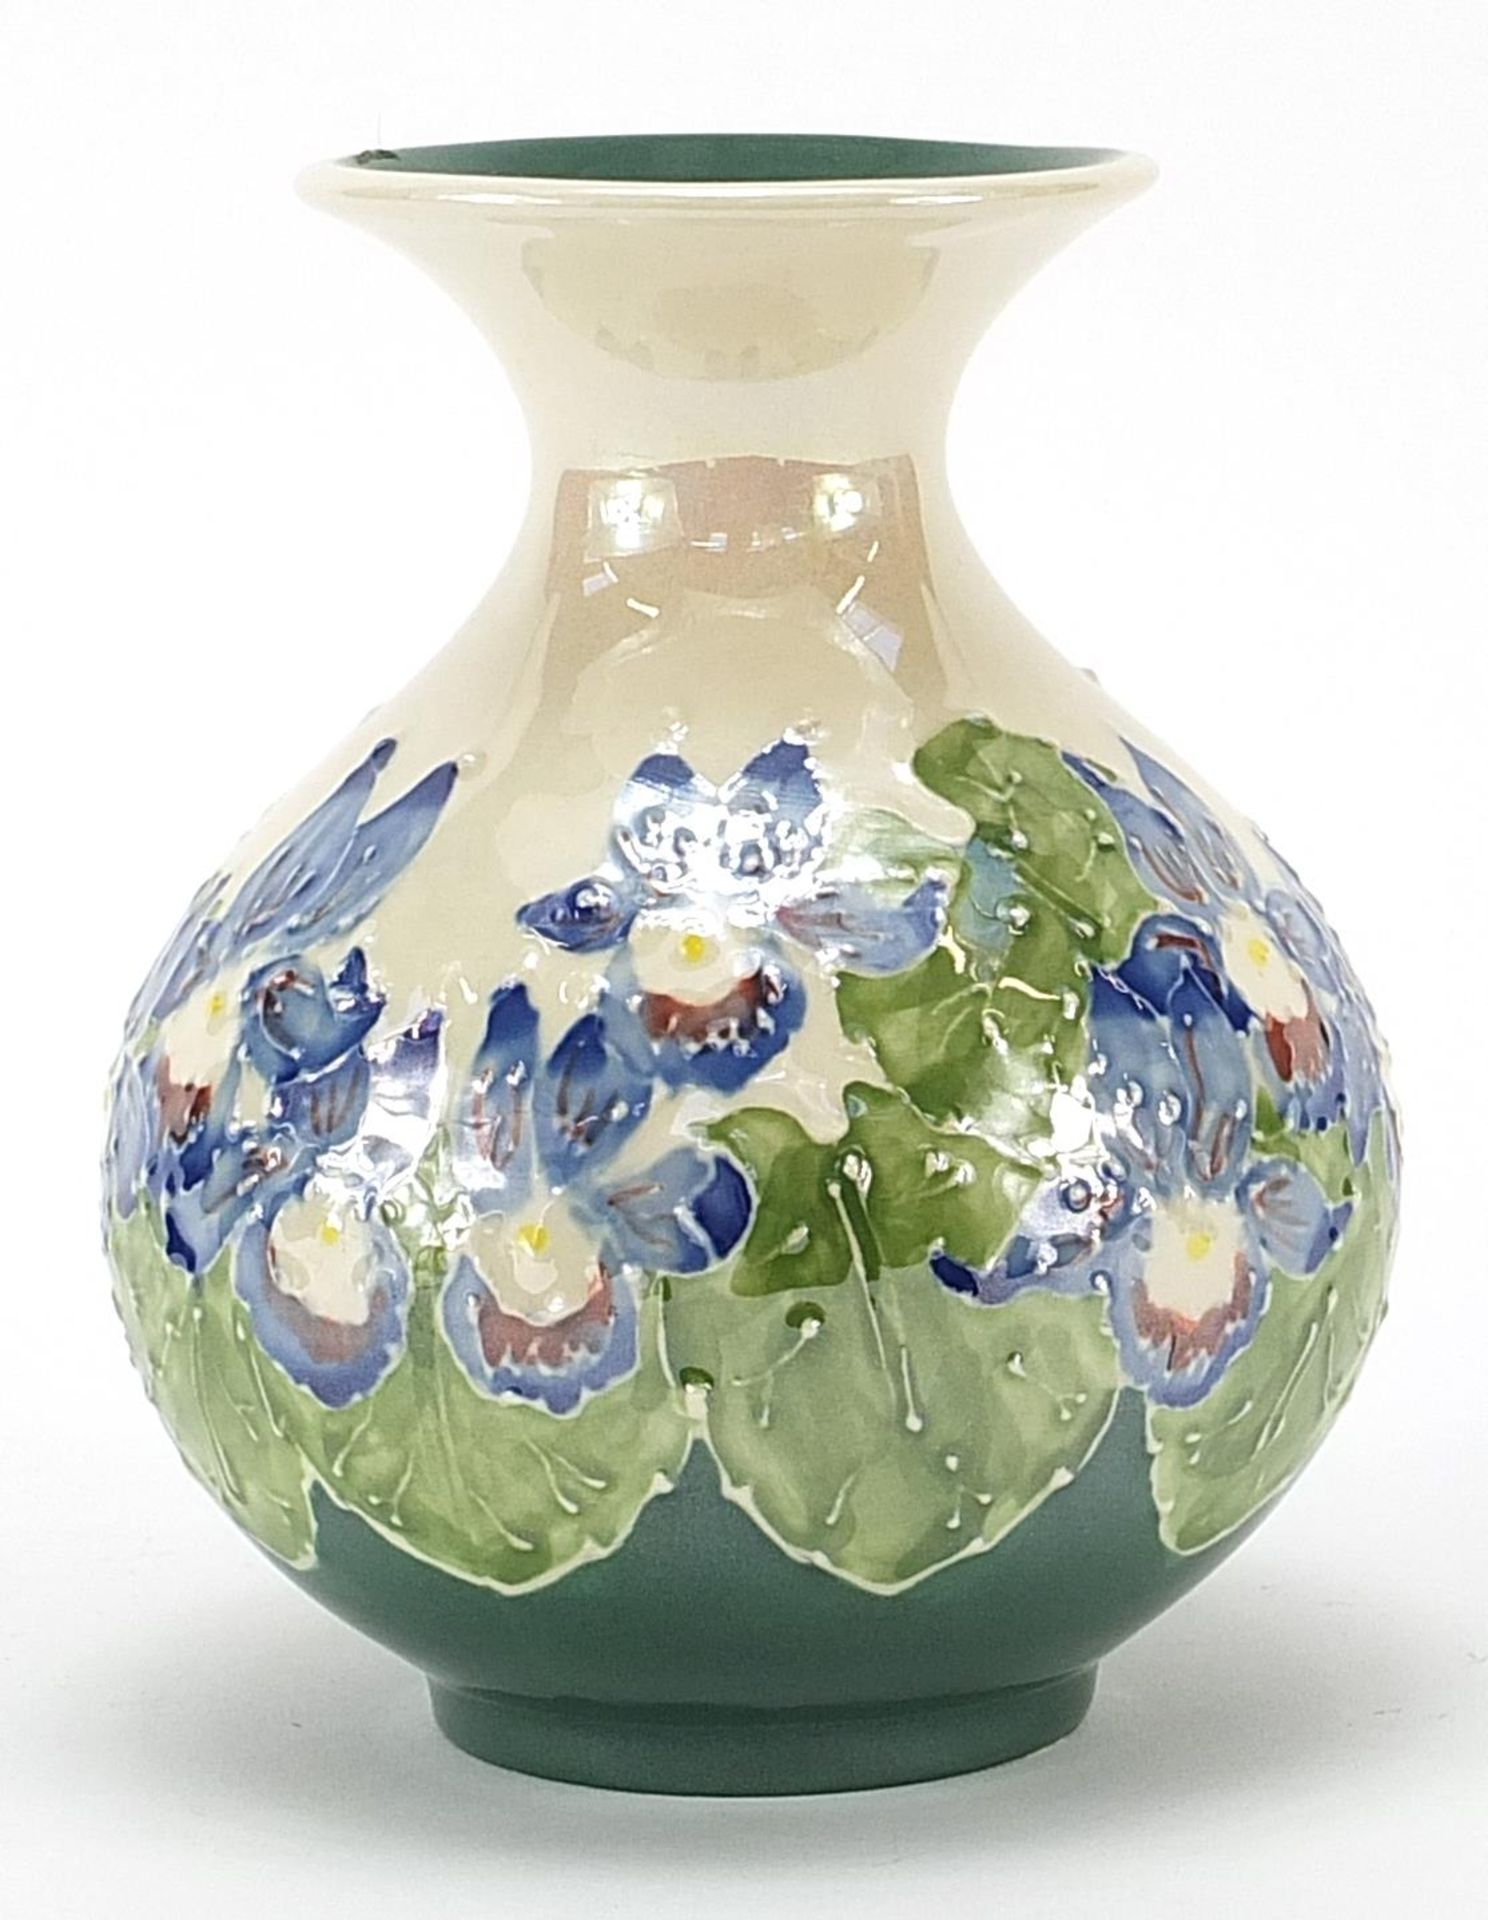 Chelsea Works Burslem Moorland vase hand painted with flowers, 232/750, 15cm high - Image 2 of 4